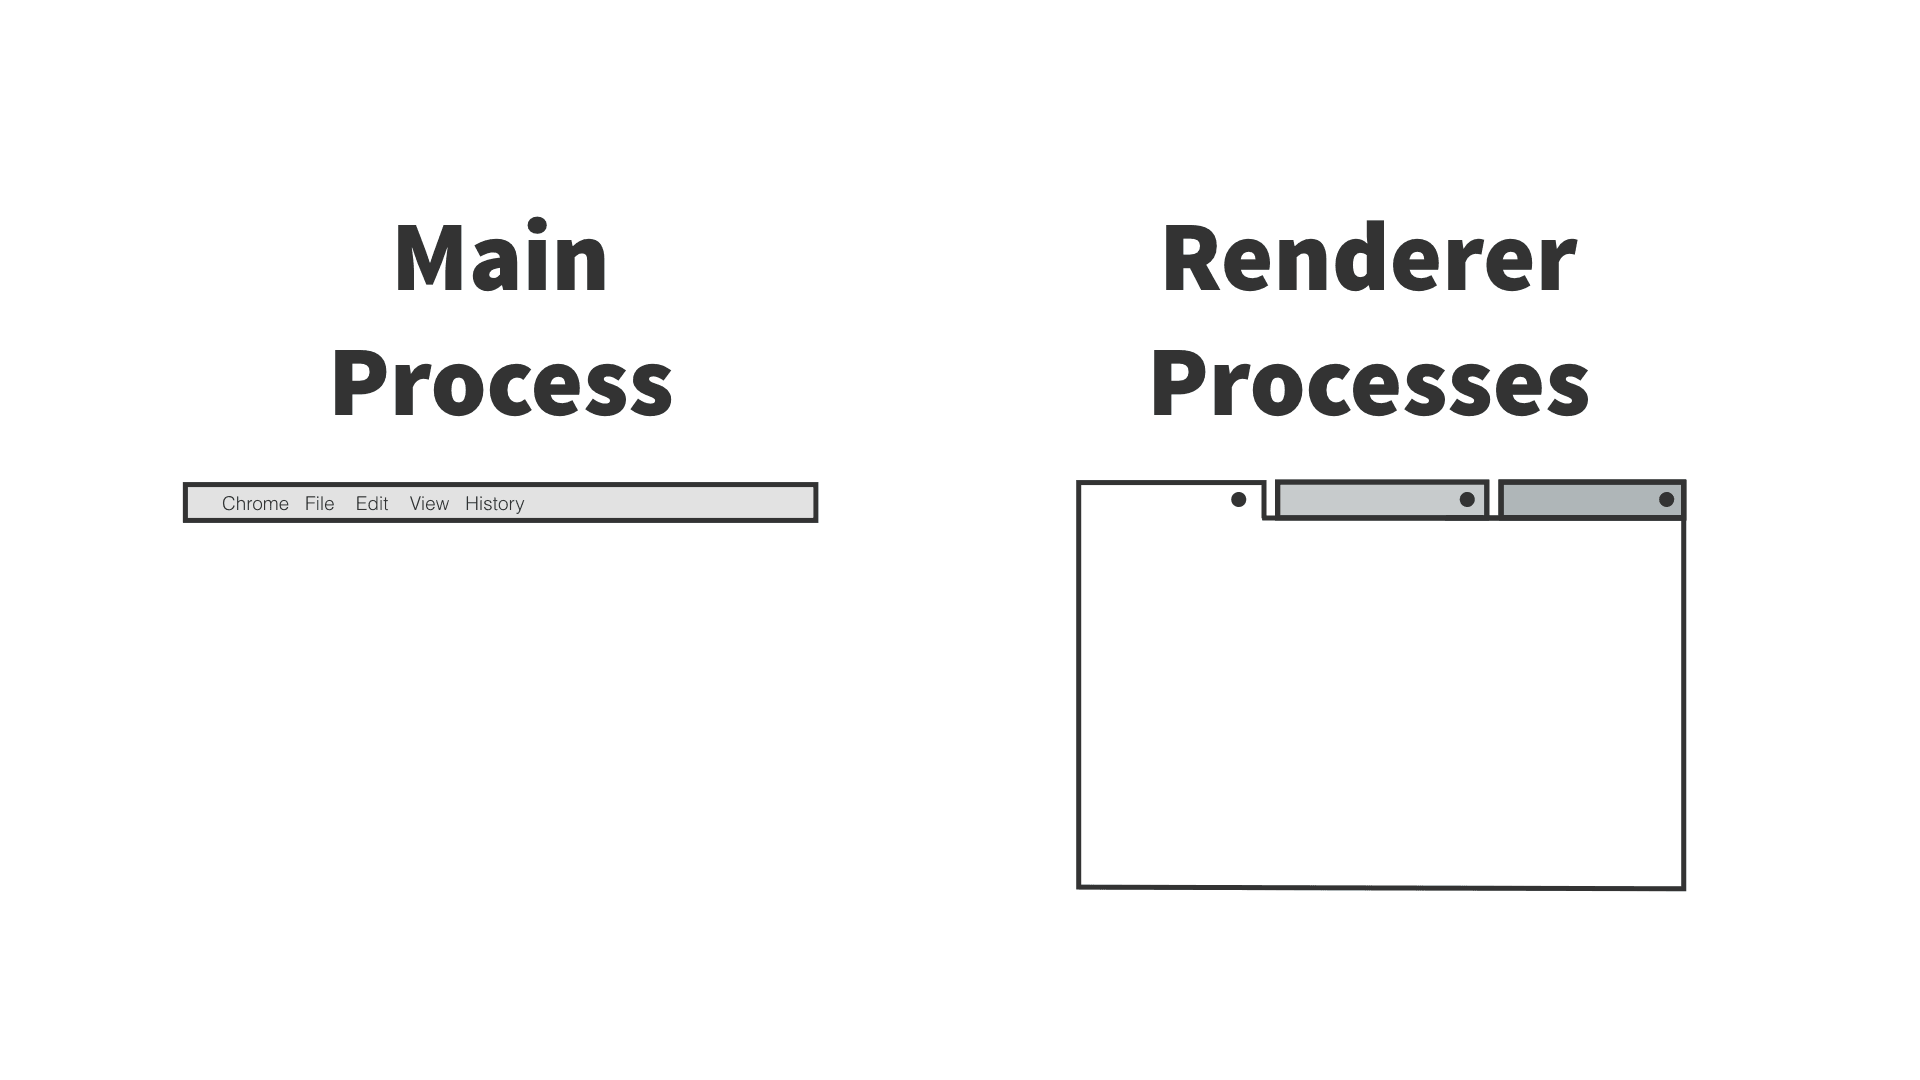 Chrome comparison of the two processes